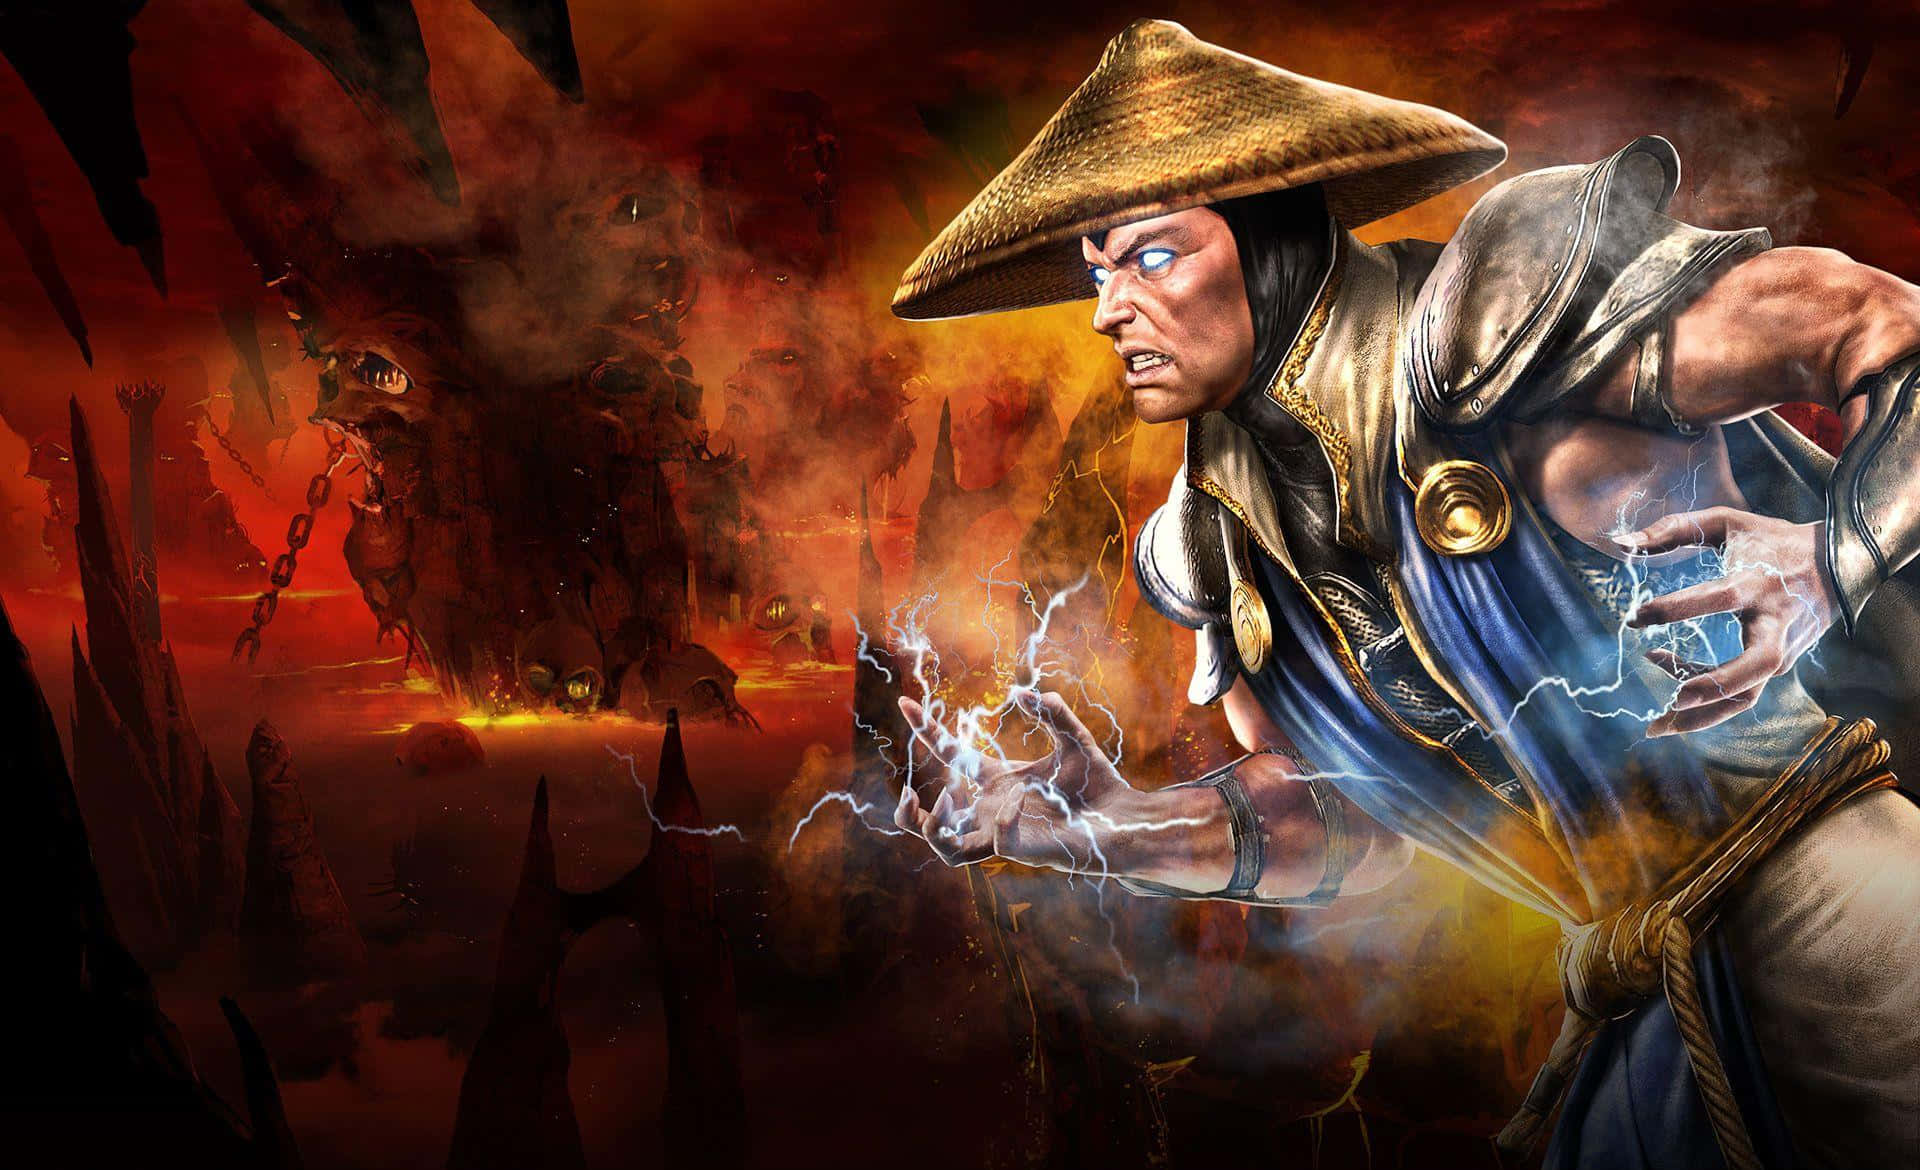 Epic Showdown in Mortal Kombat Vs DC Universe ( Wallpaper